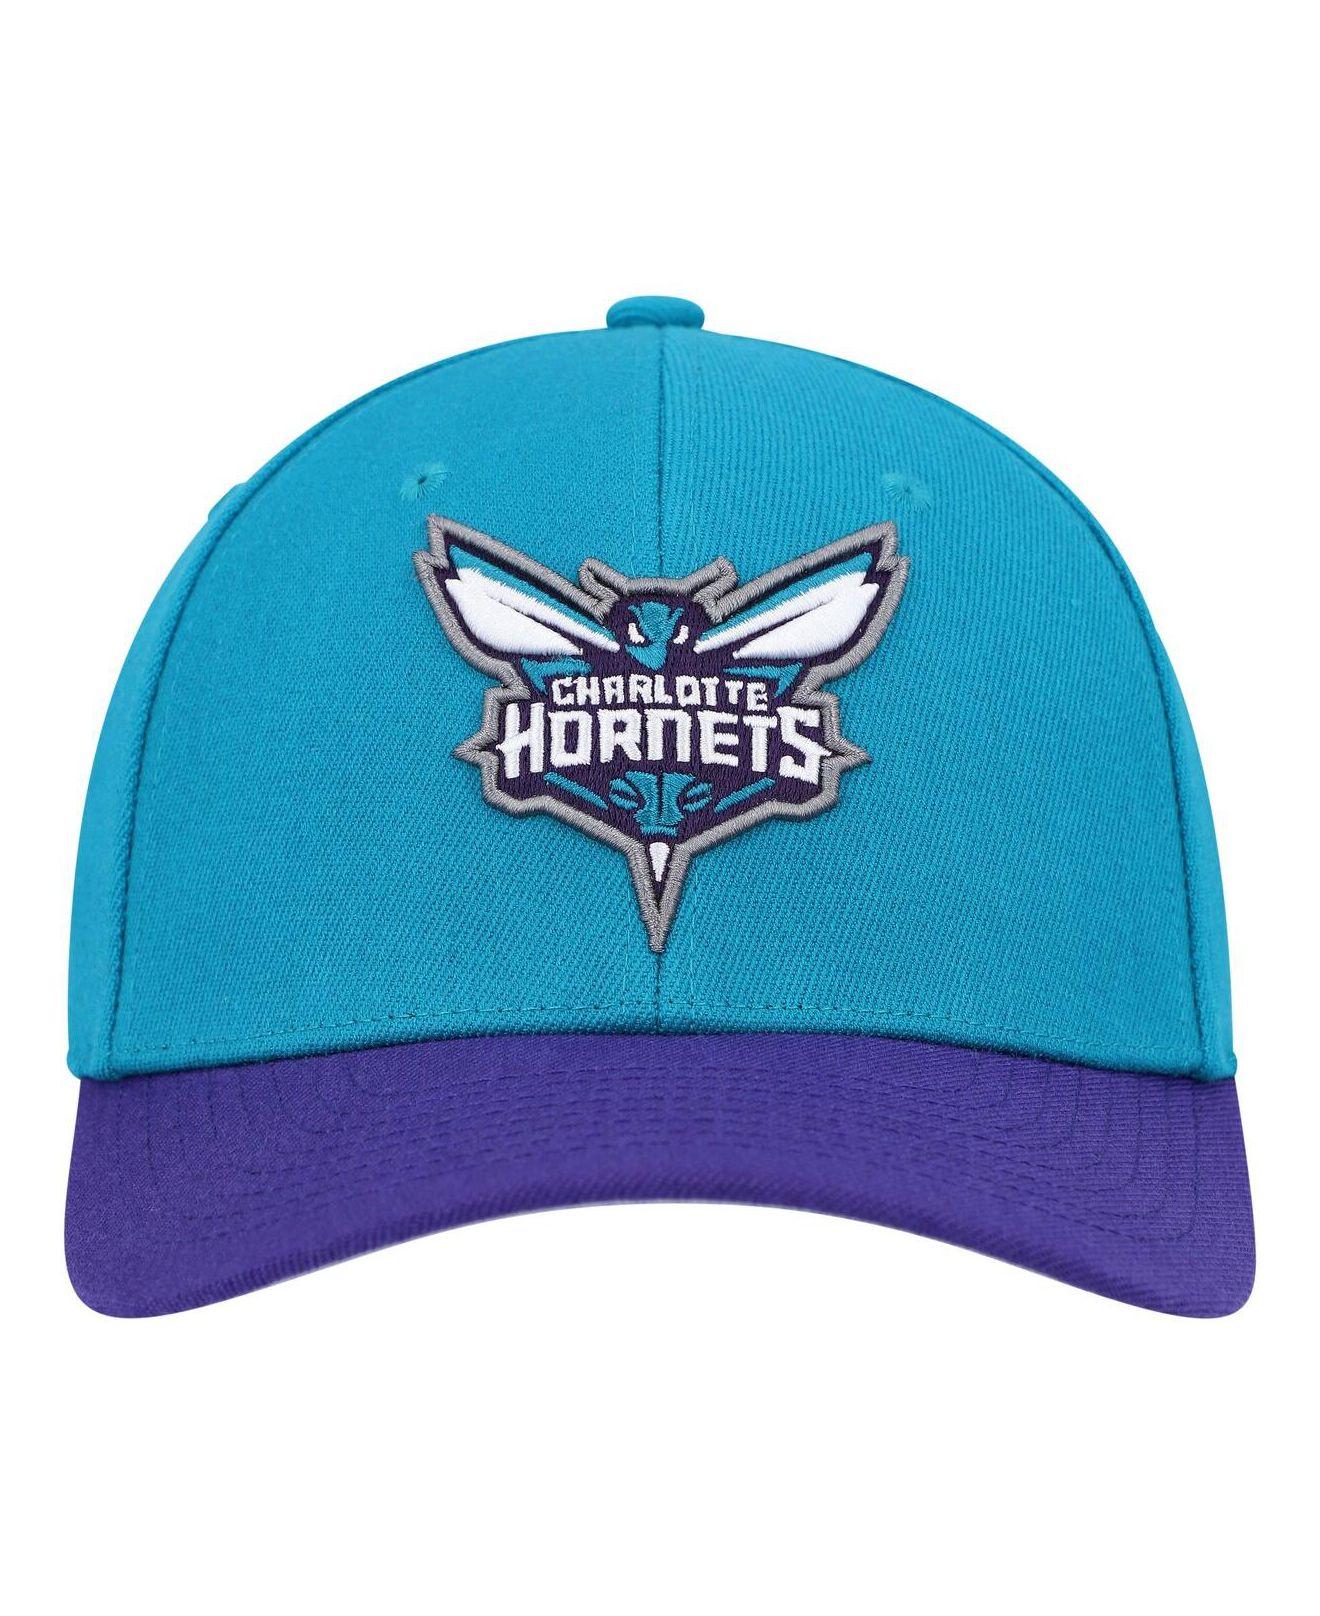 Charlotte Hornets Mitchell & Ness Hardwood Classics Two-Tone Snapback Hat -  Purple/Teal